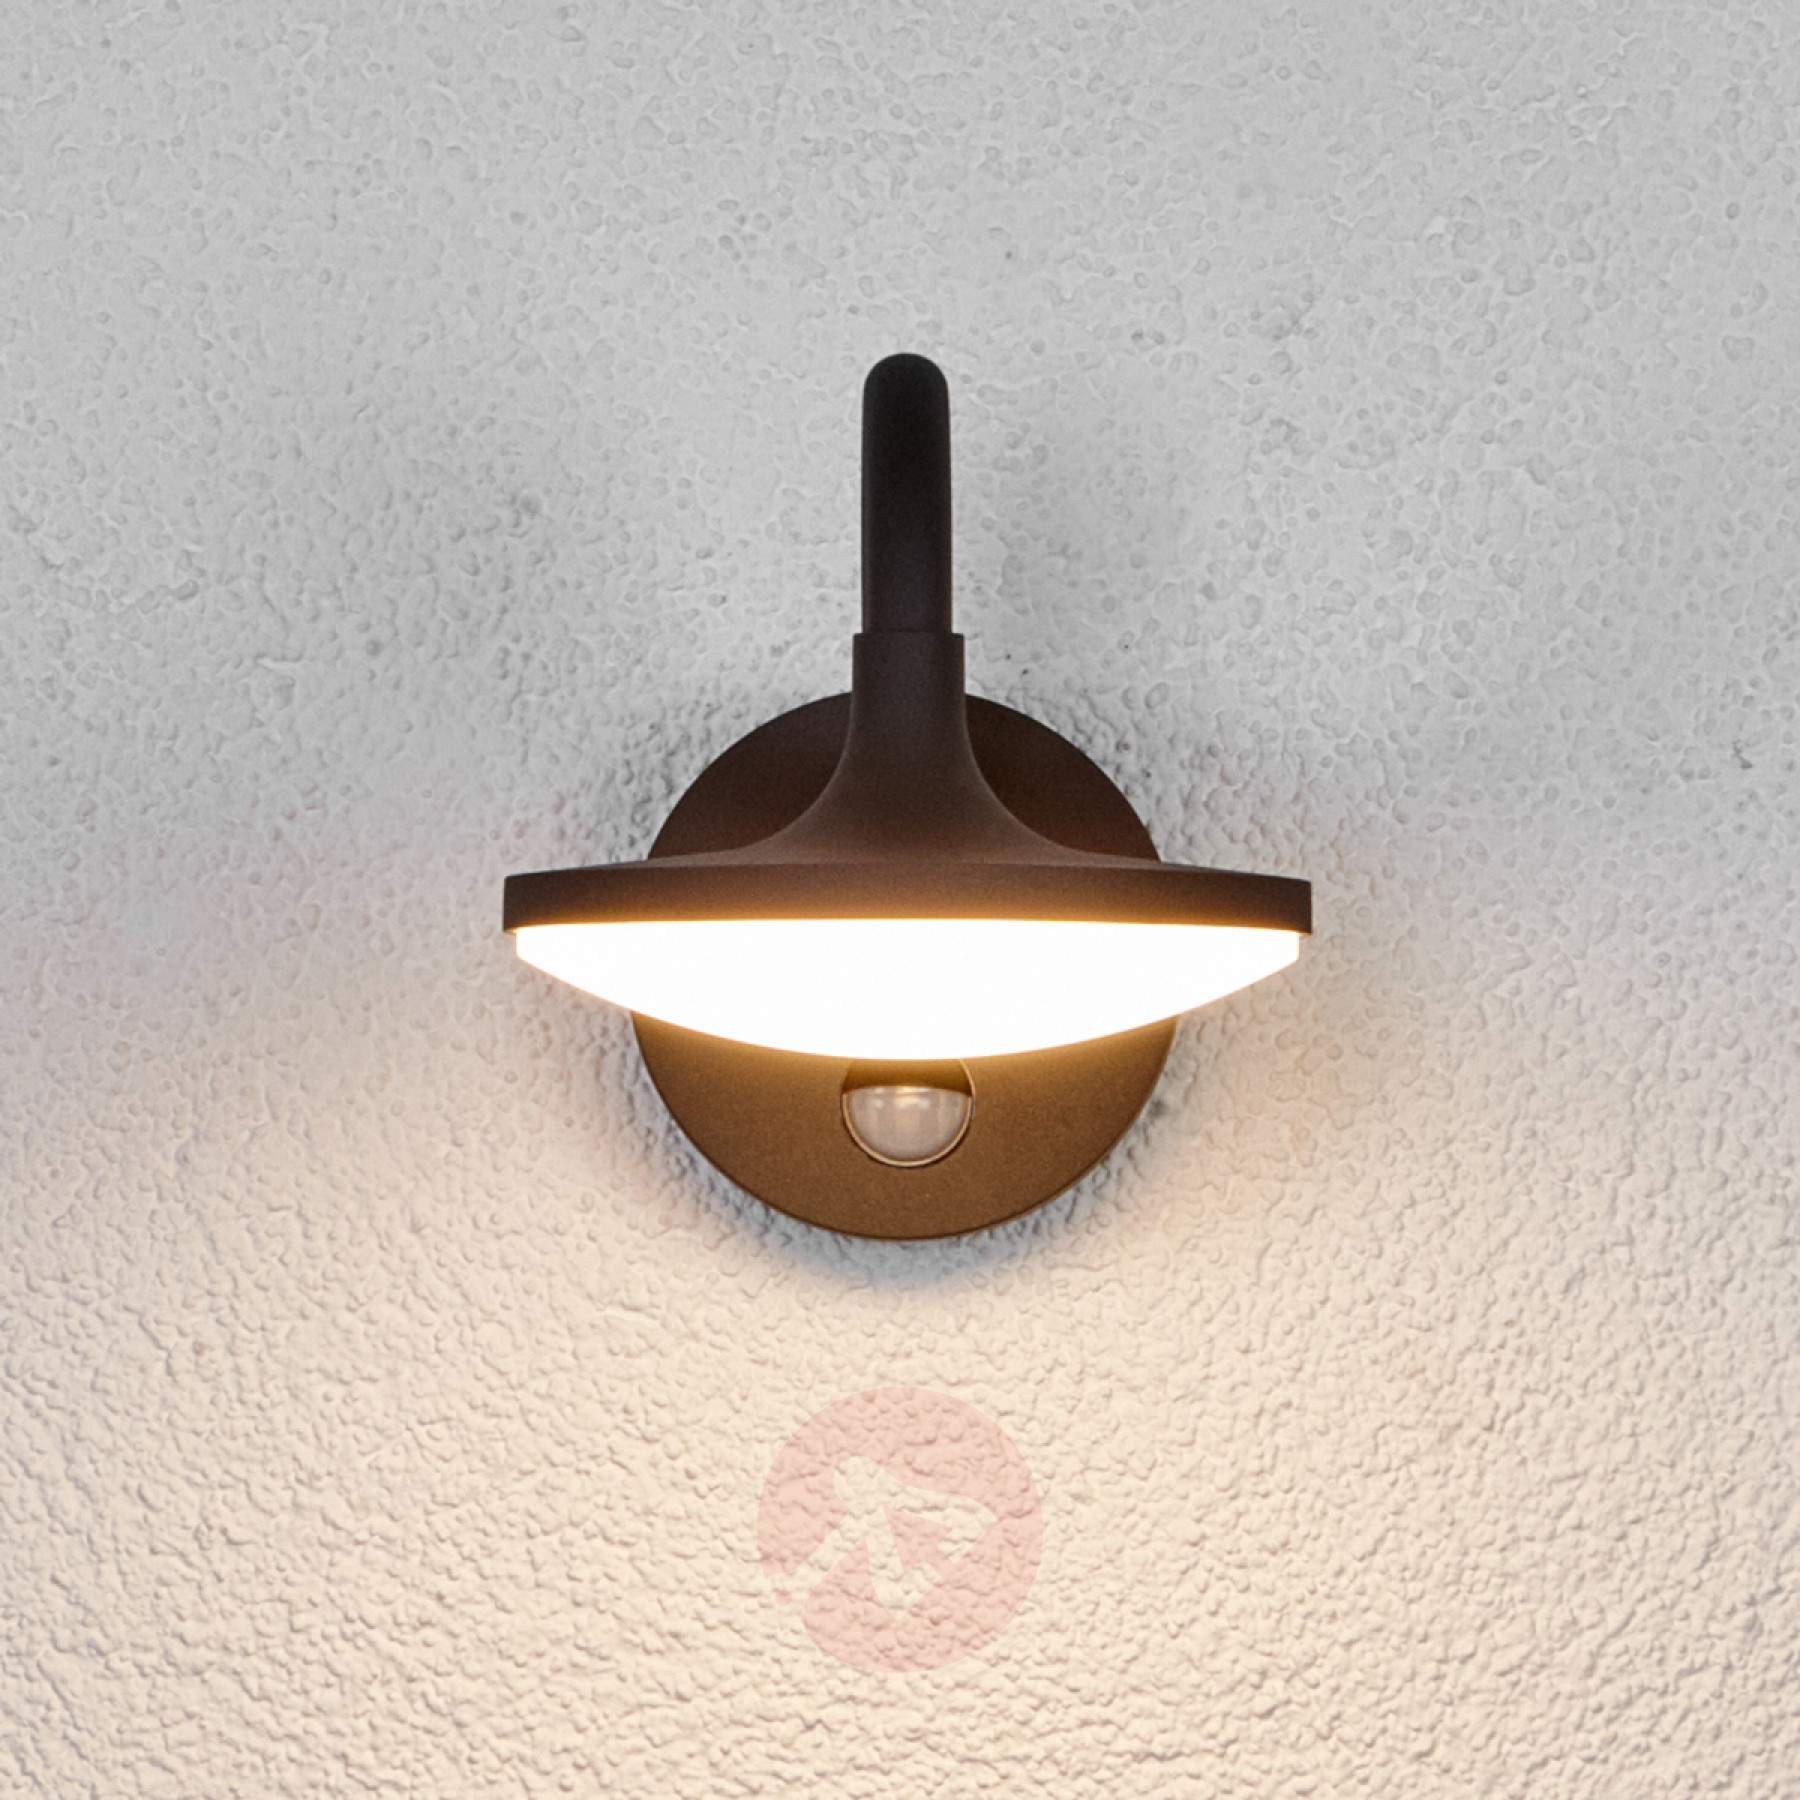 Lampe Mit Bewegungsmelder
 Finny LED Außenwandlampe mit Bewegungsmelder